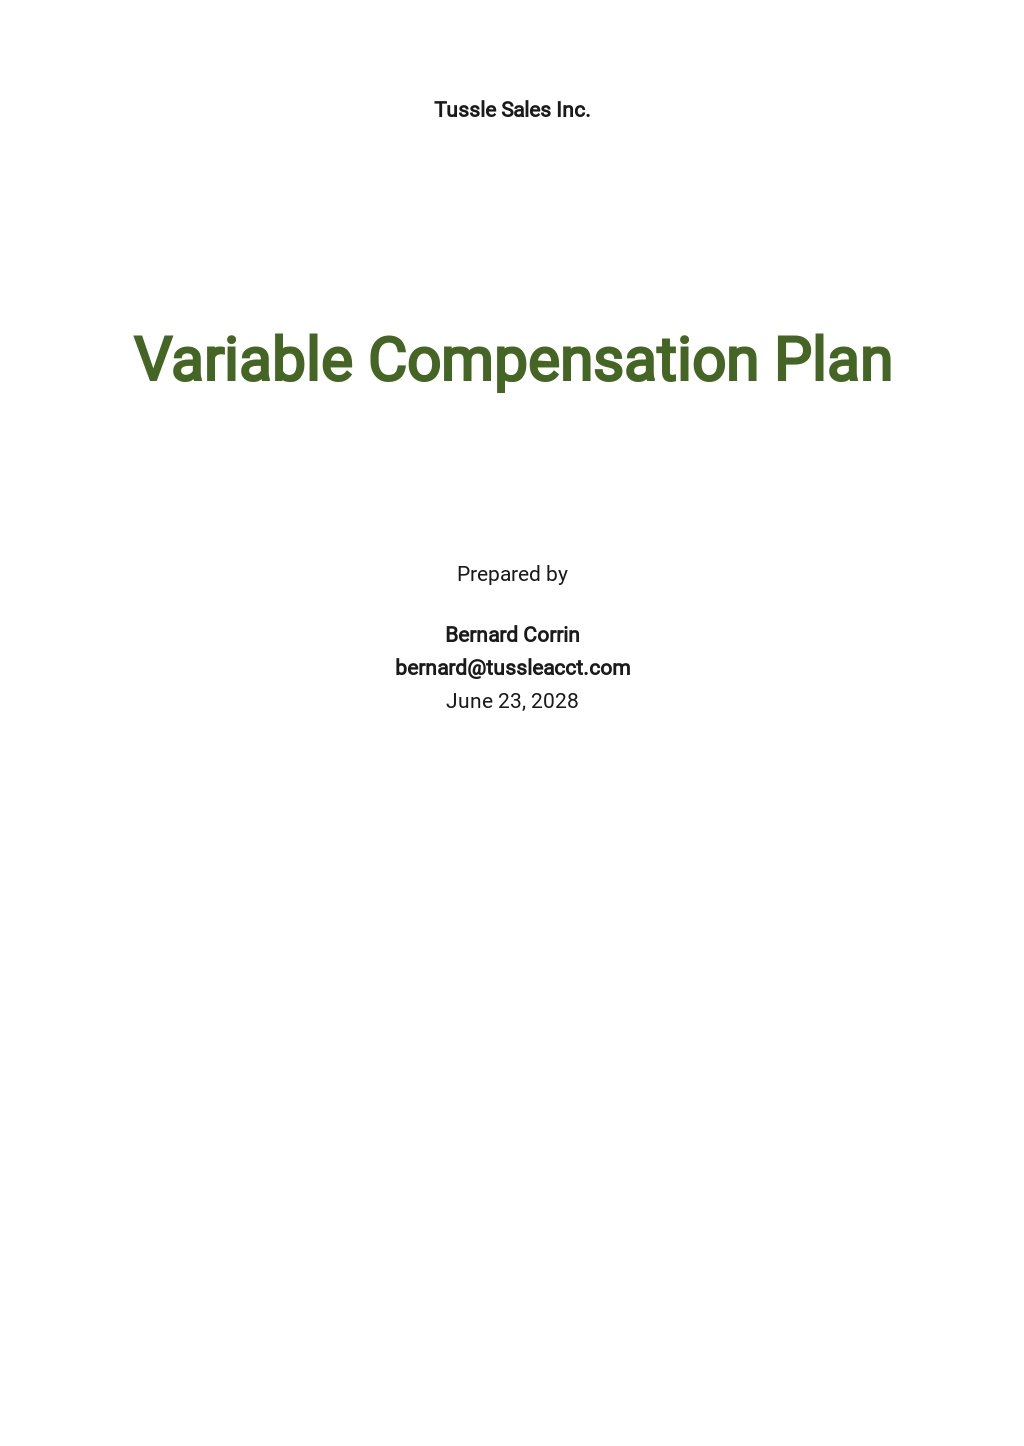 sales-compensation-plan-template-word